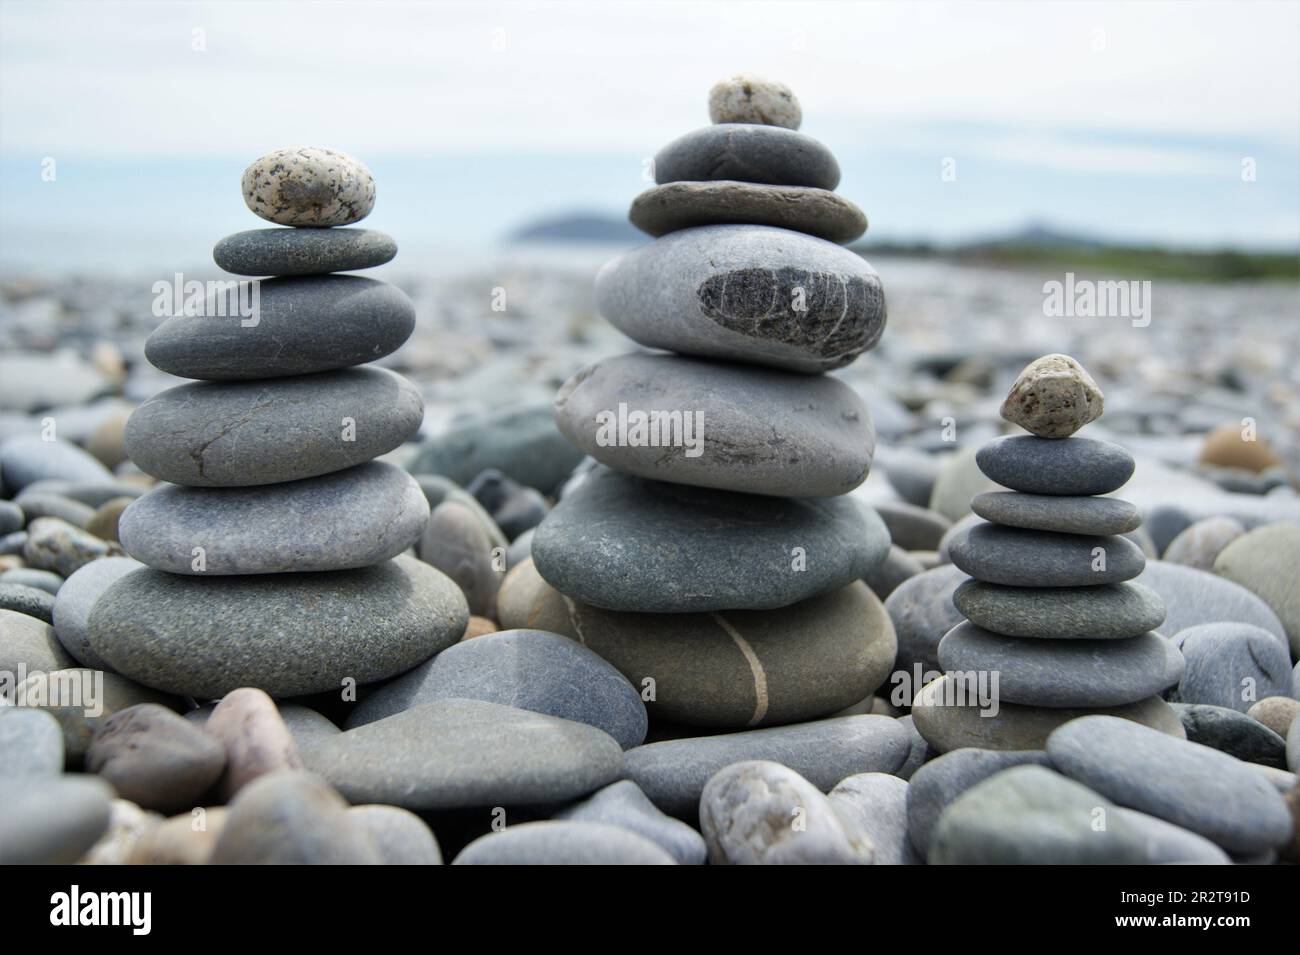 Three Zen towers on a stony beach. Towers made of pebbles. Stock Photo